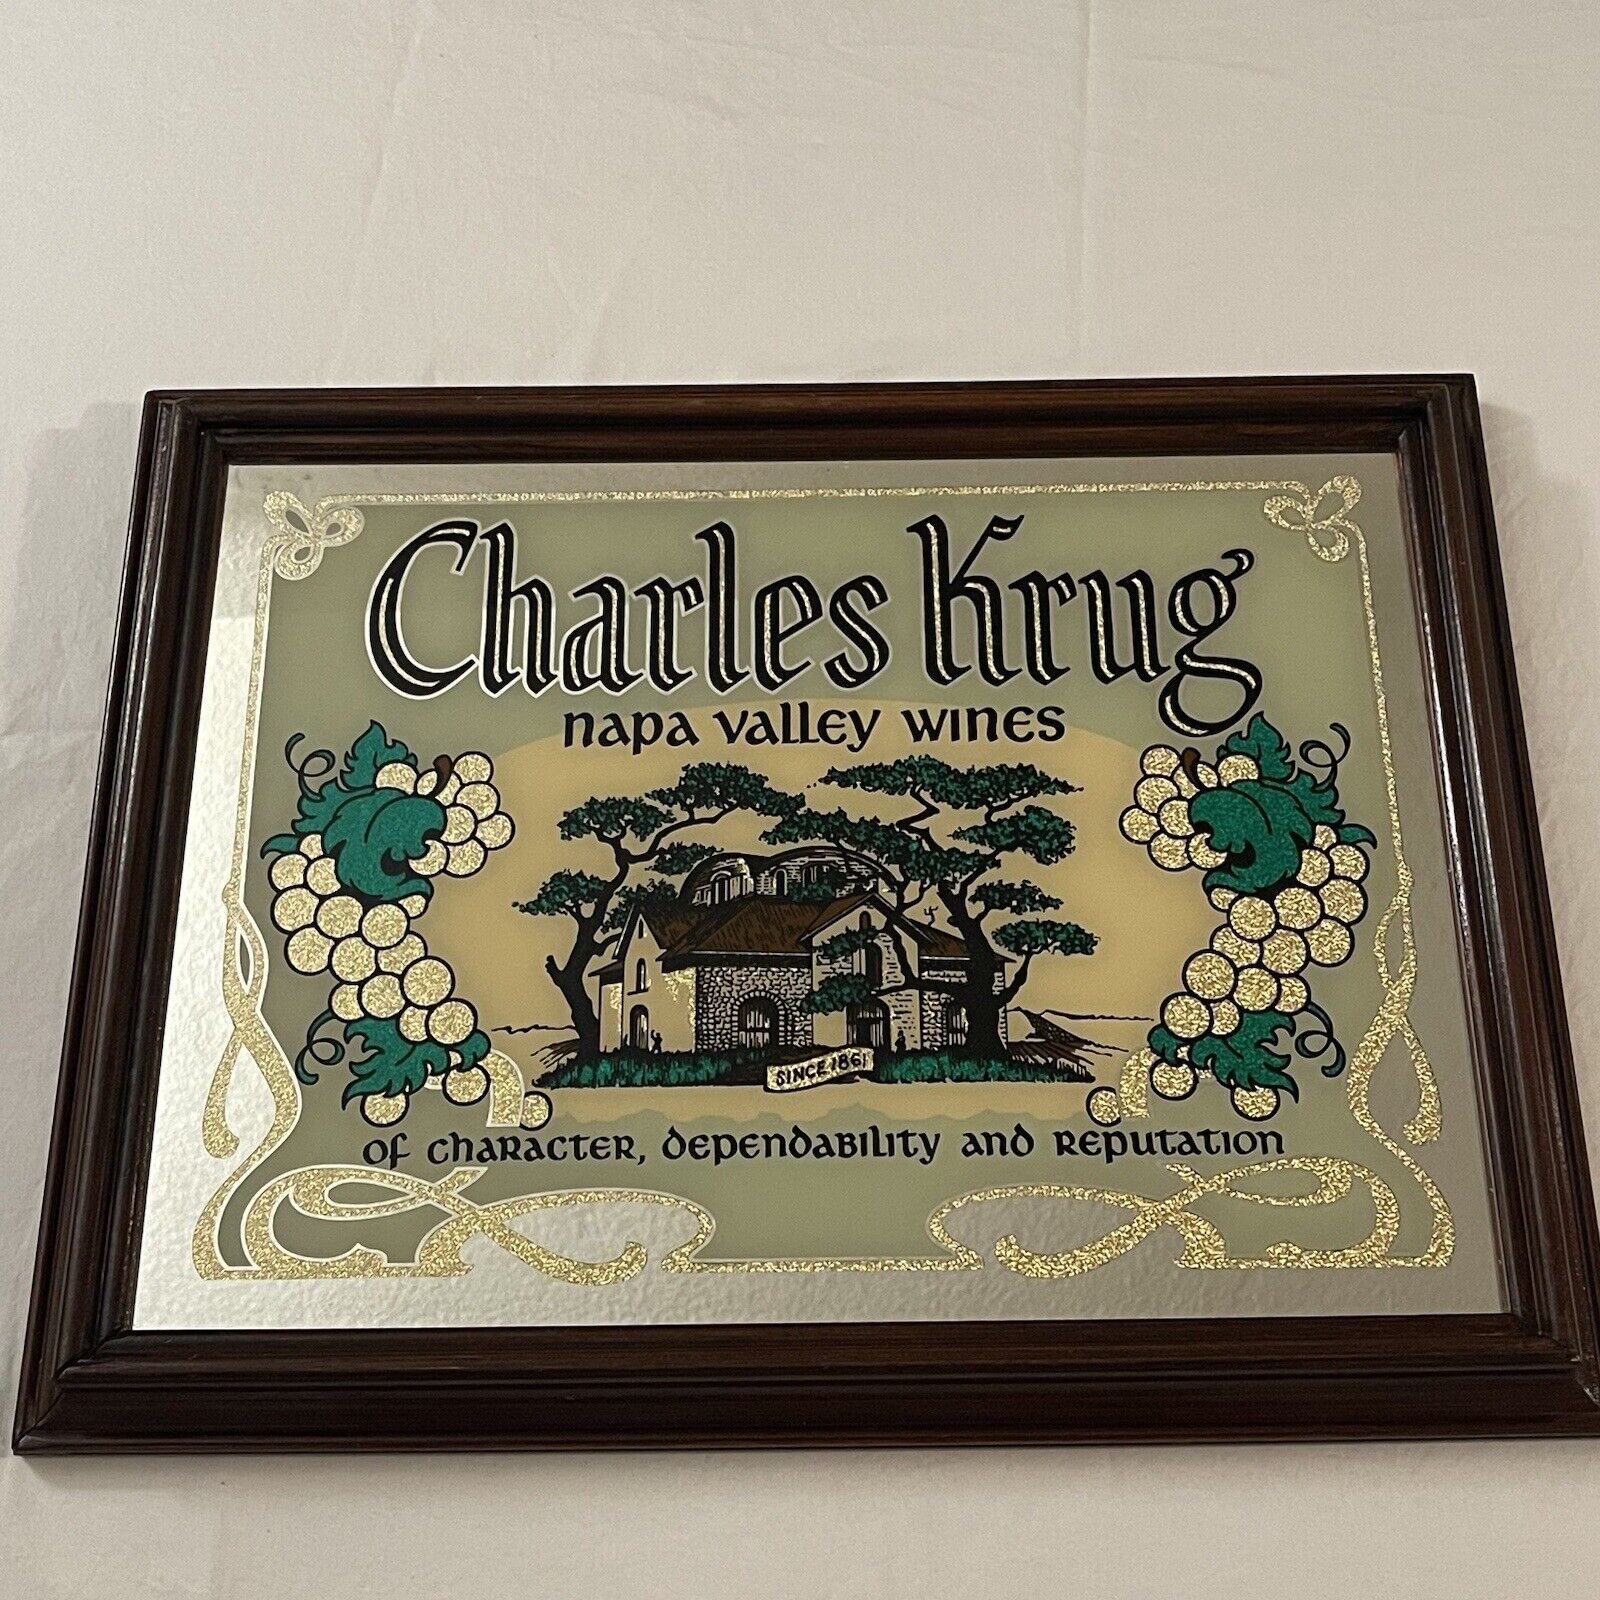 Charles Krug Napa Valley Wines Art SignMirror Framed Rare